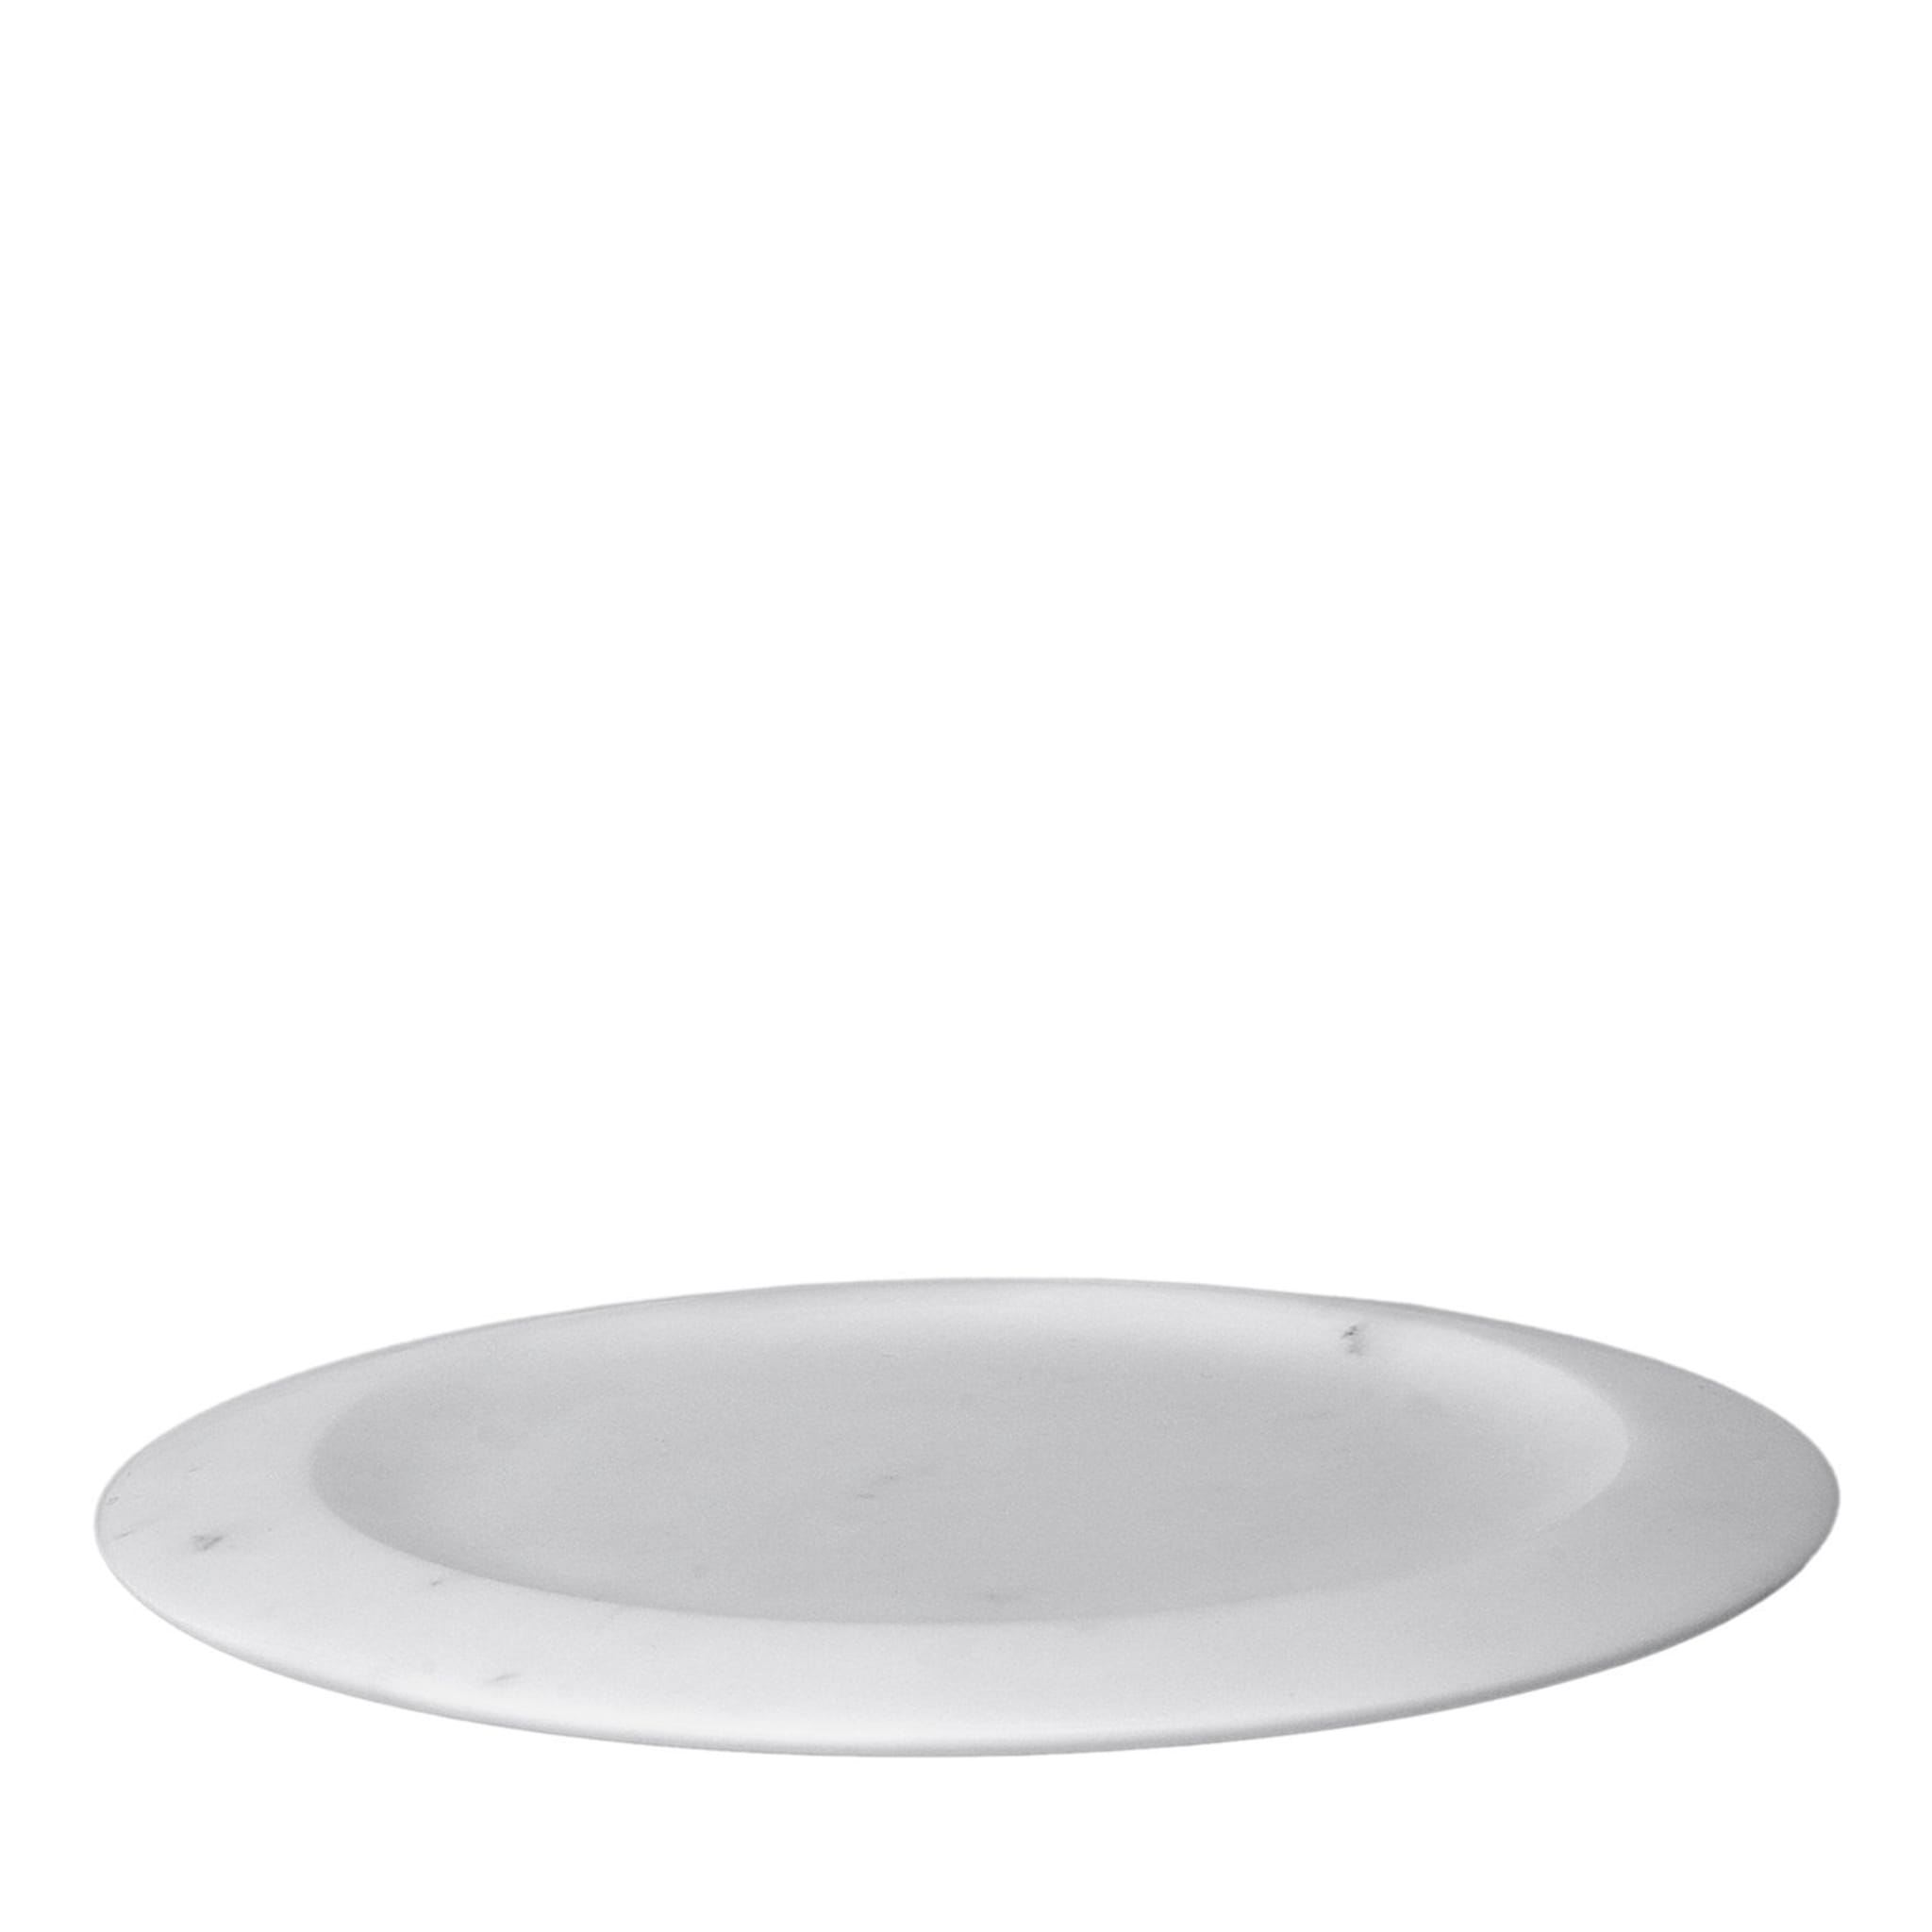 White Carrara Dinner Plate by Ivan Colominas #2 - Main view